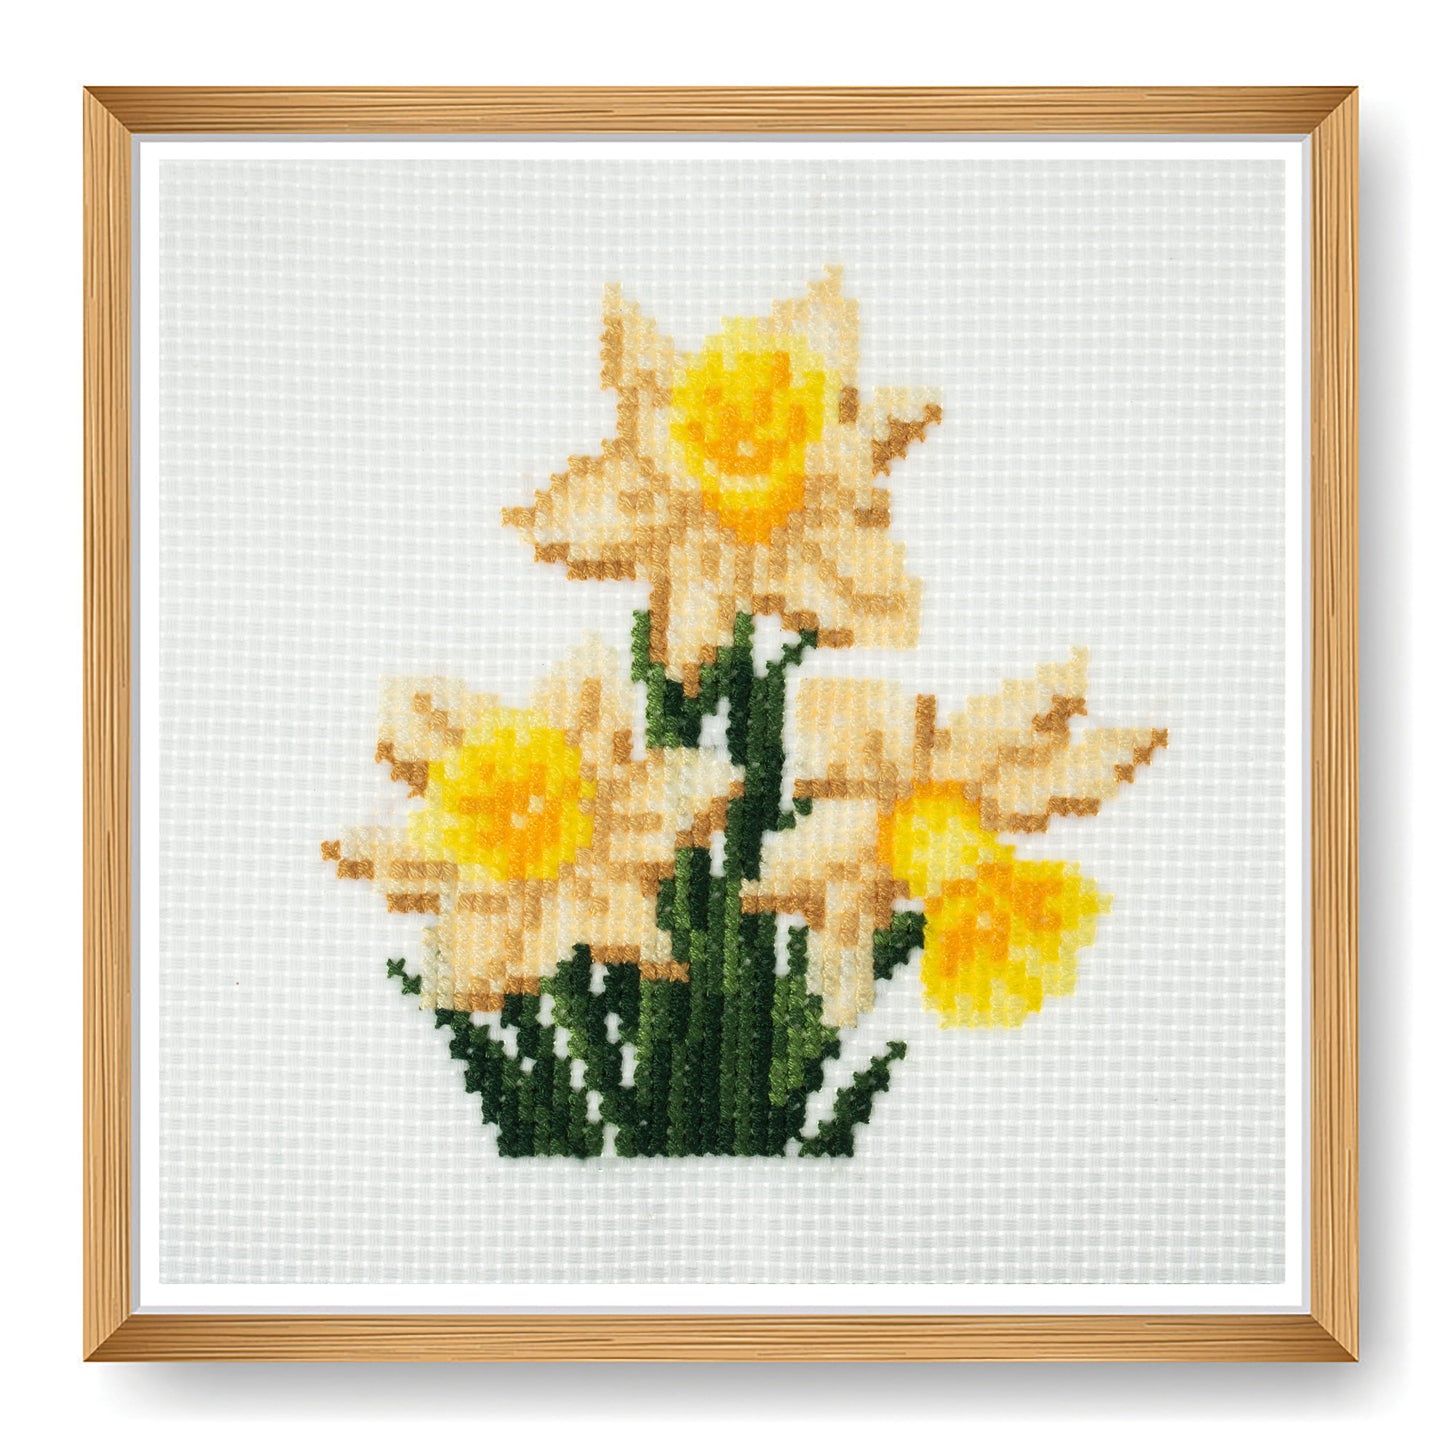 COUNTED CROSS STITCH KIT - Daffodils